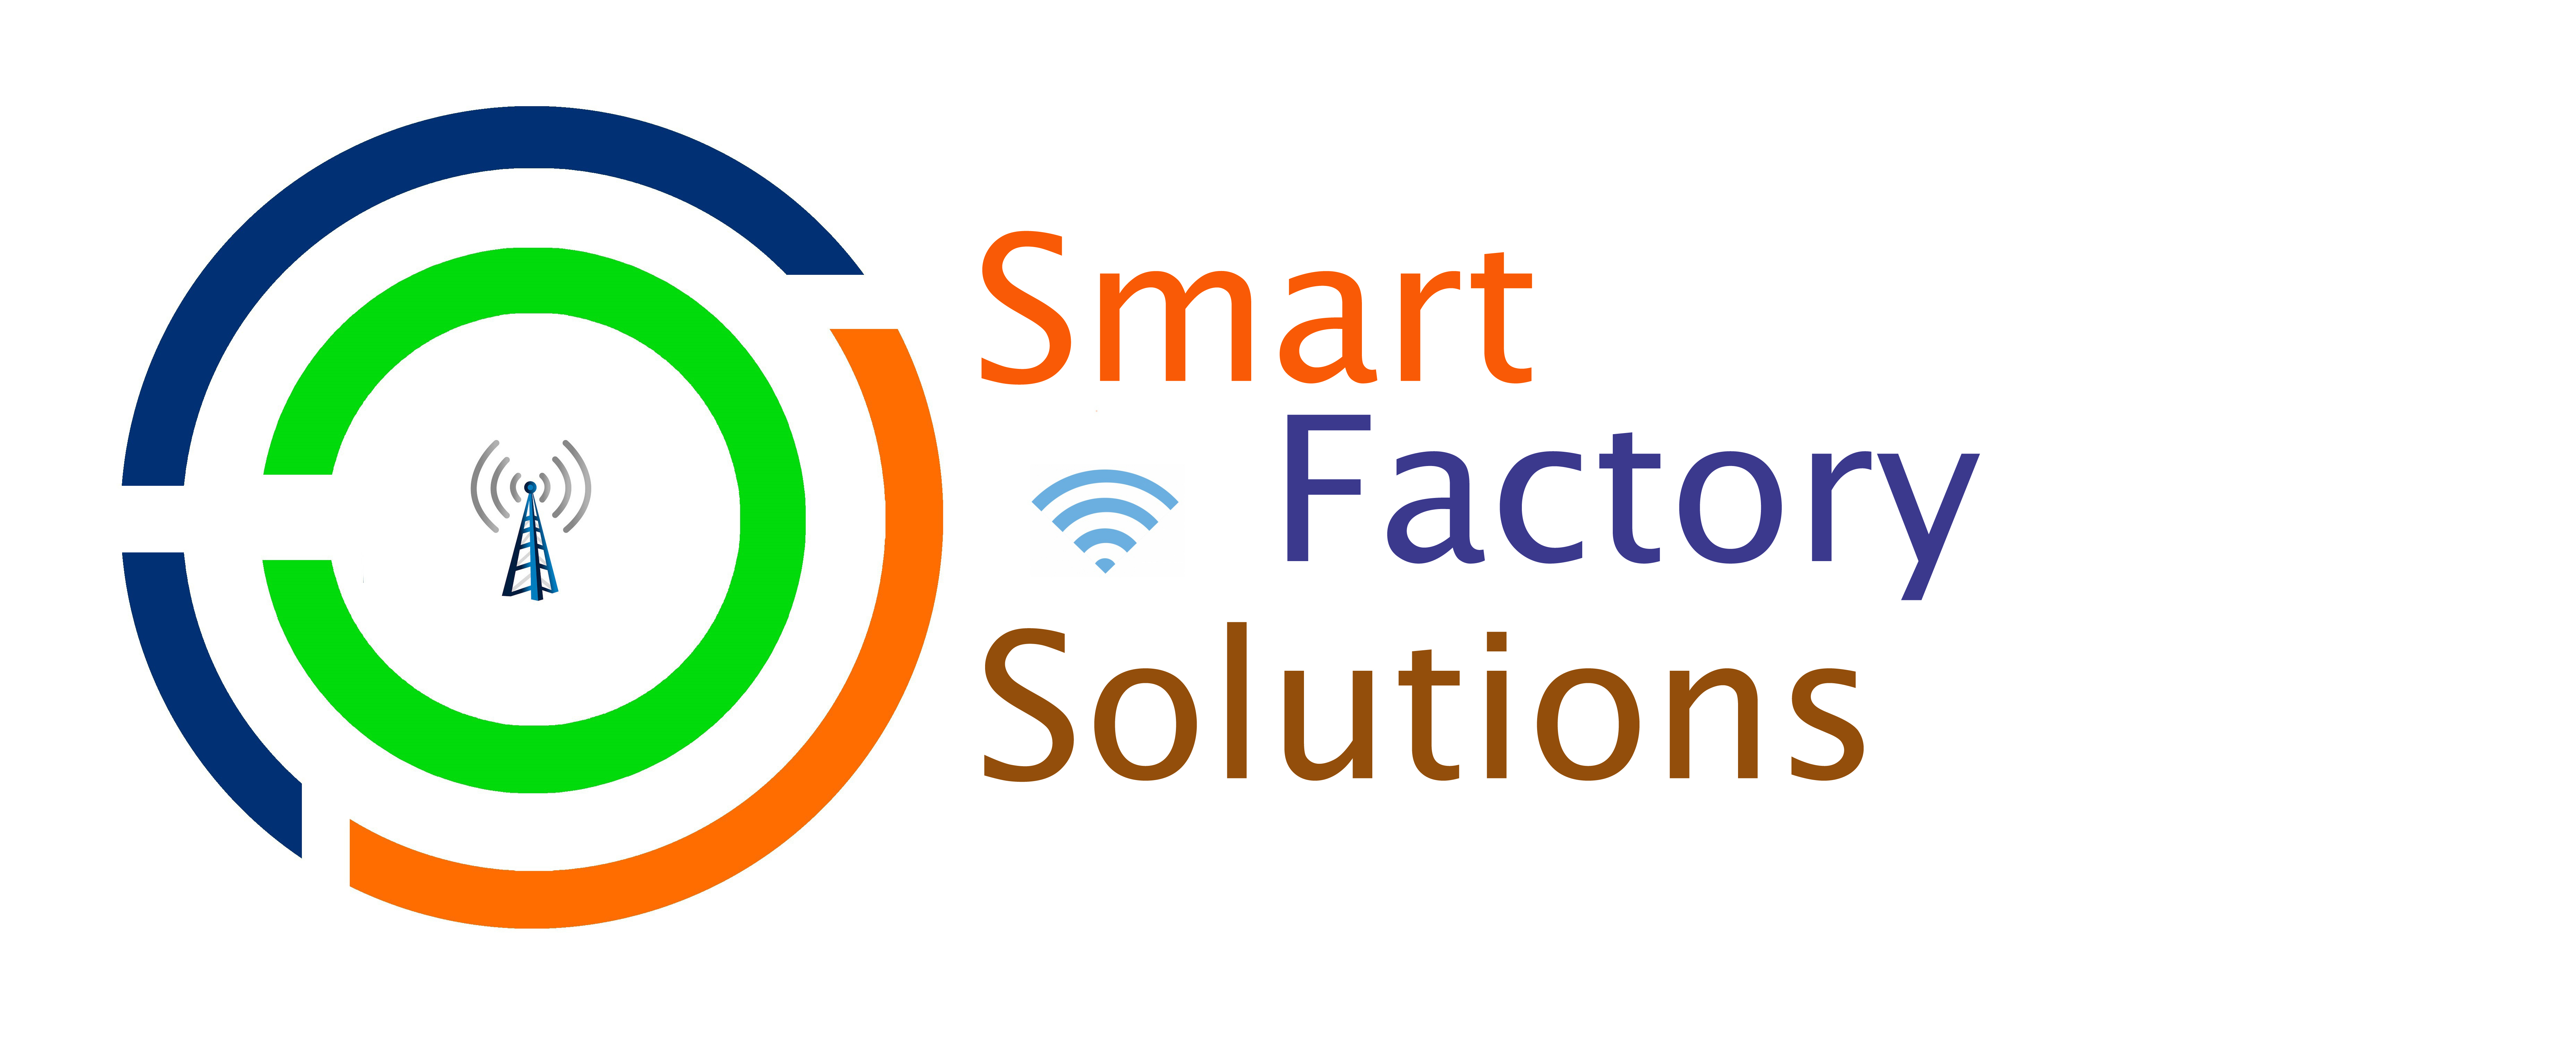 Smart Factory Logo